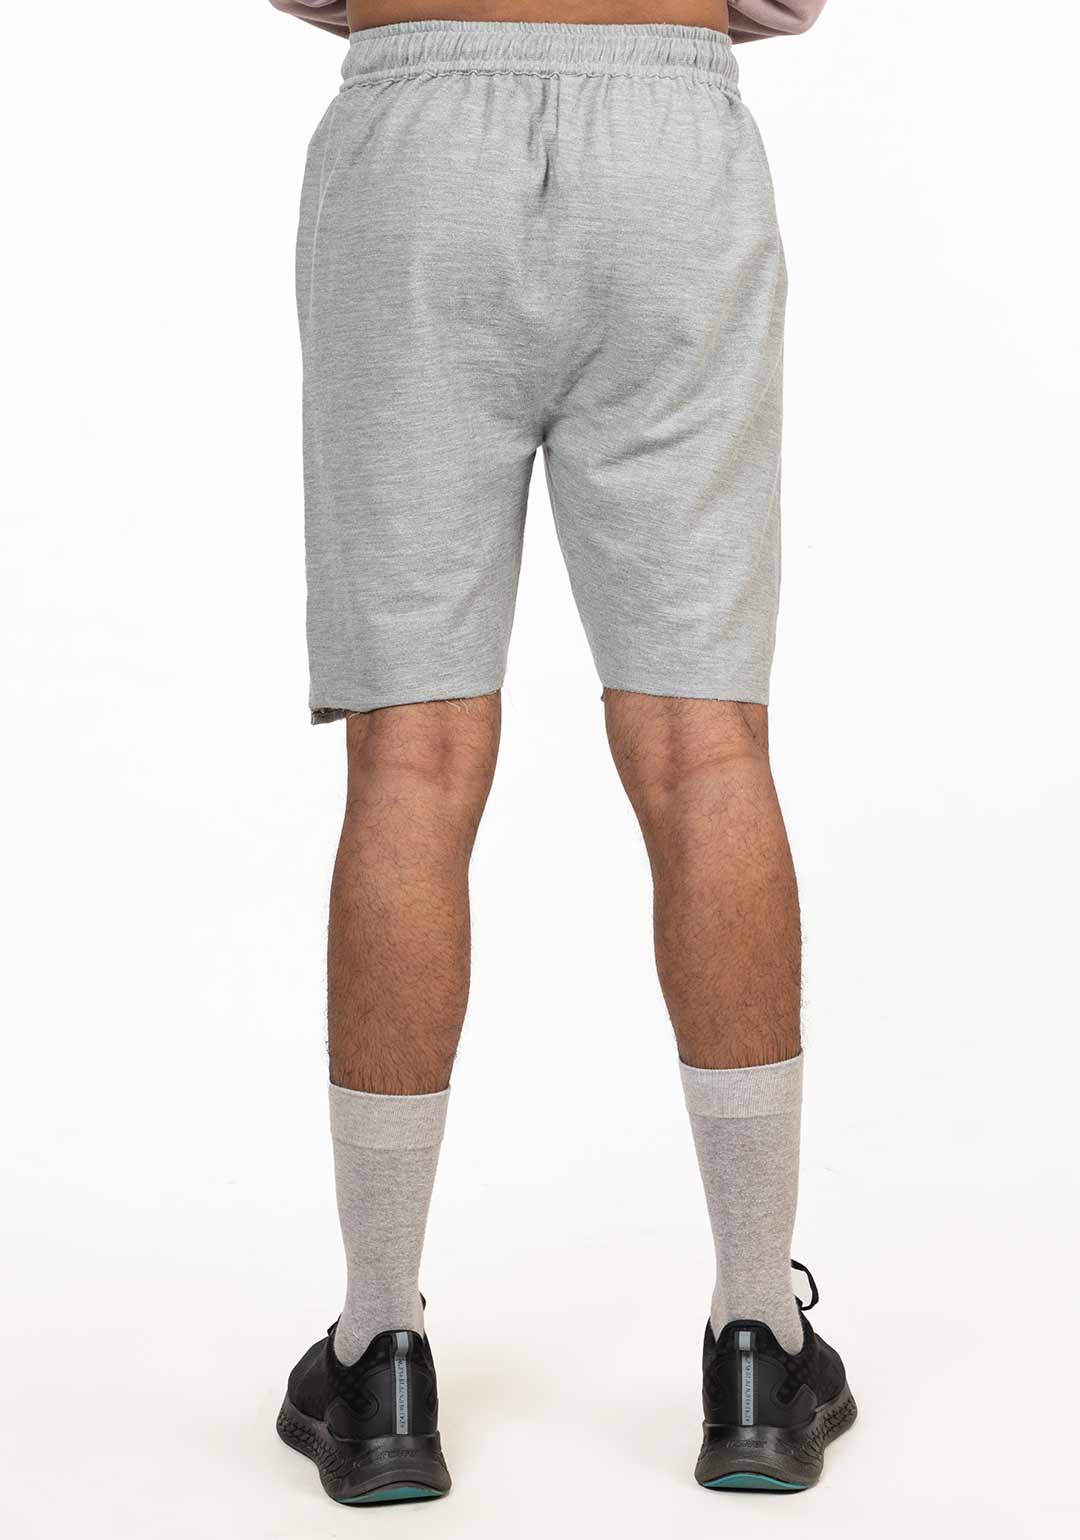 Grey Utility Men's Shorts